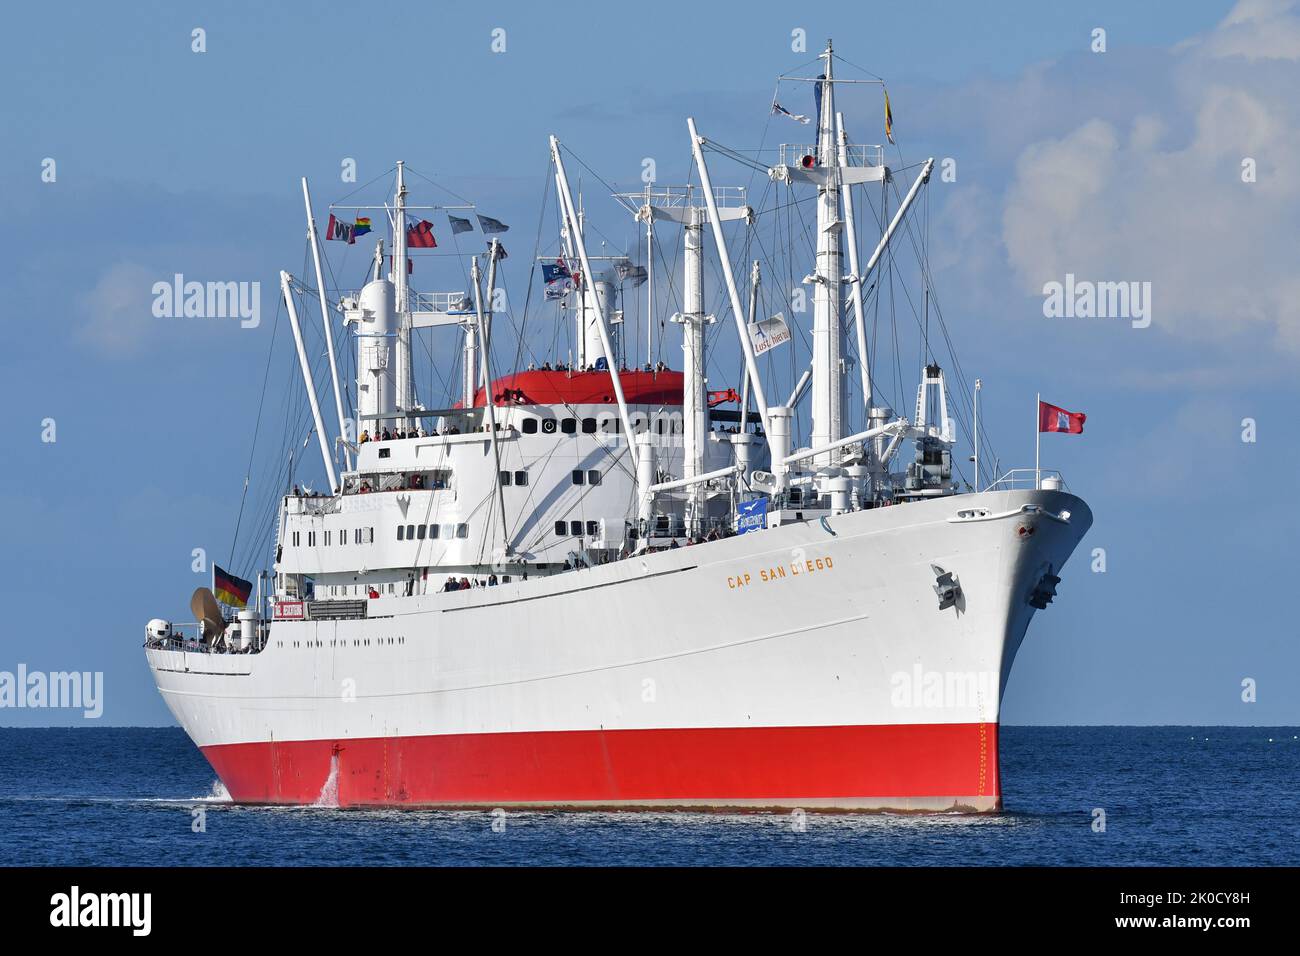 world wide biggest sea worthy museum ship CAP SAN DIEGO at the Kiel Fjord Stock Photo